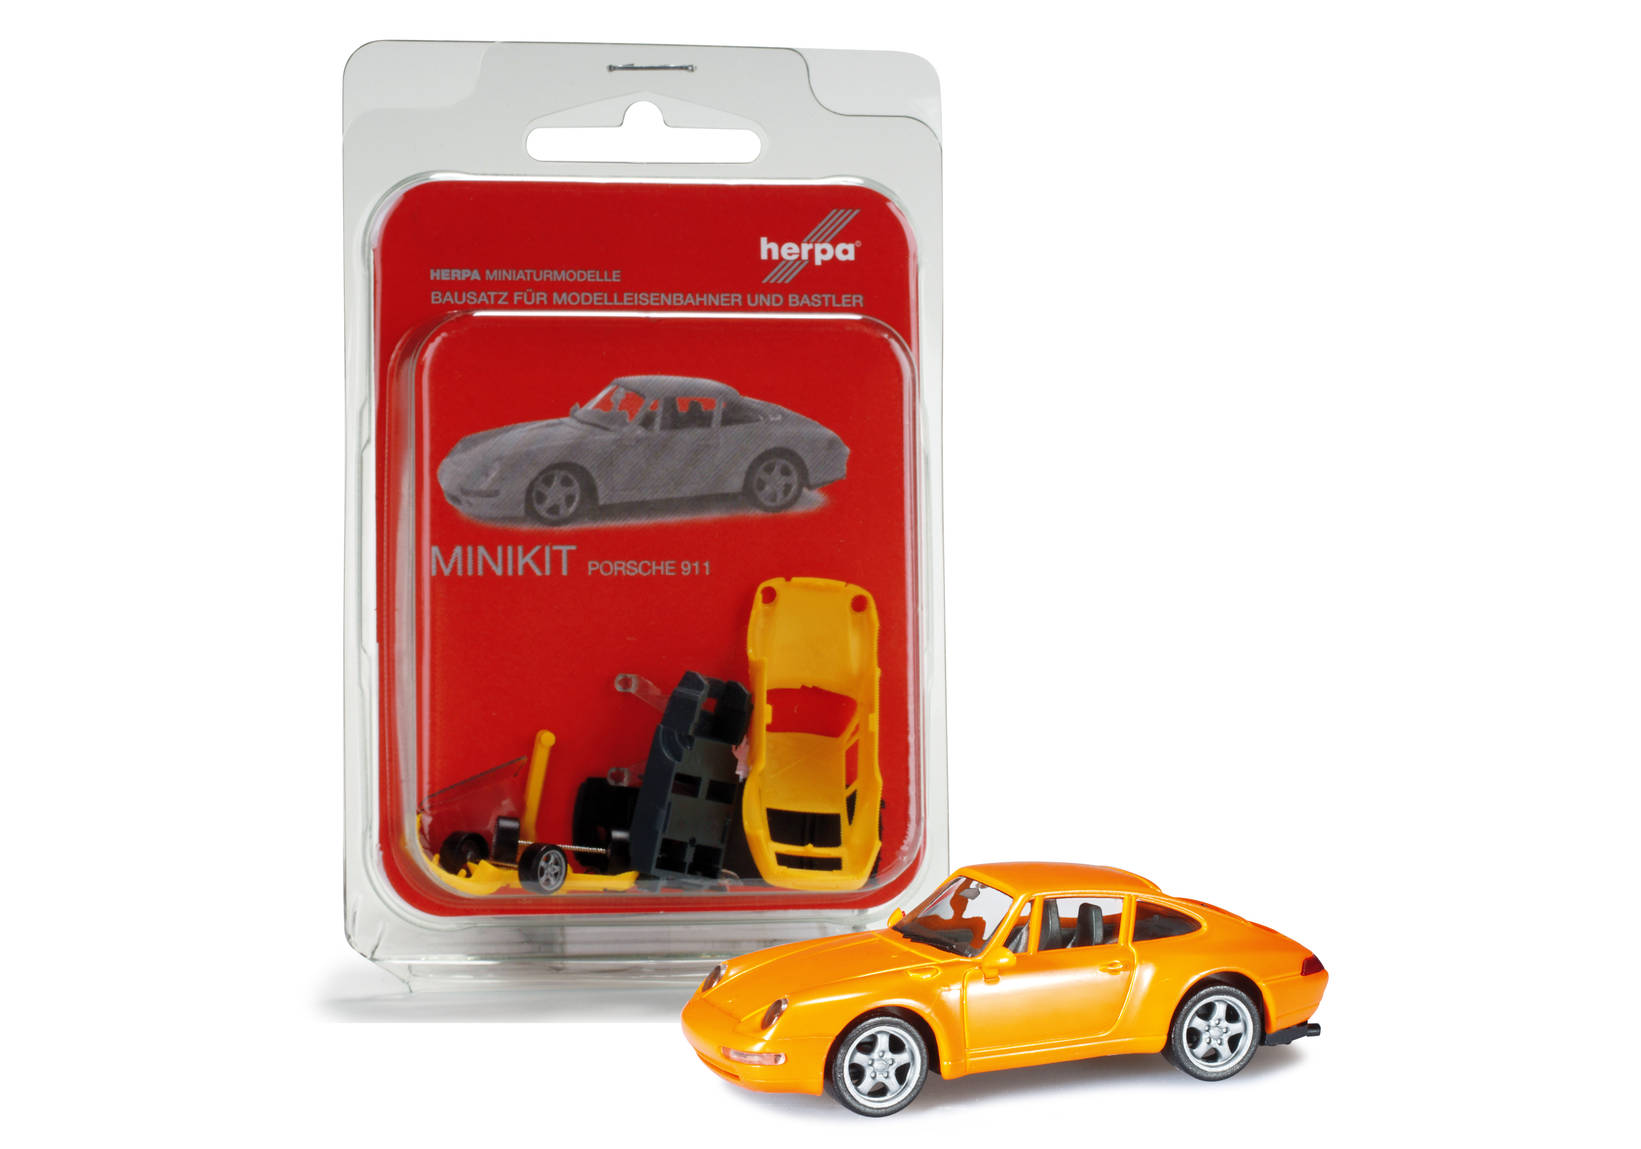 Herpa MiniKit: Porsche 911 Carrera, traffic orange